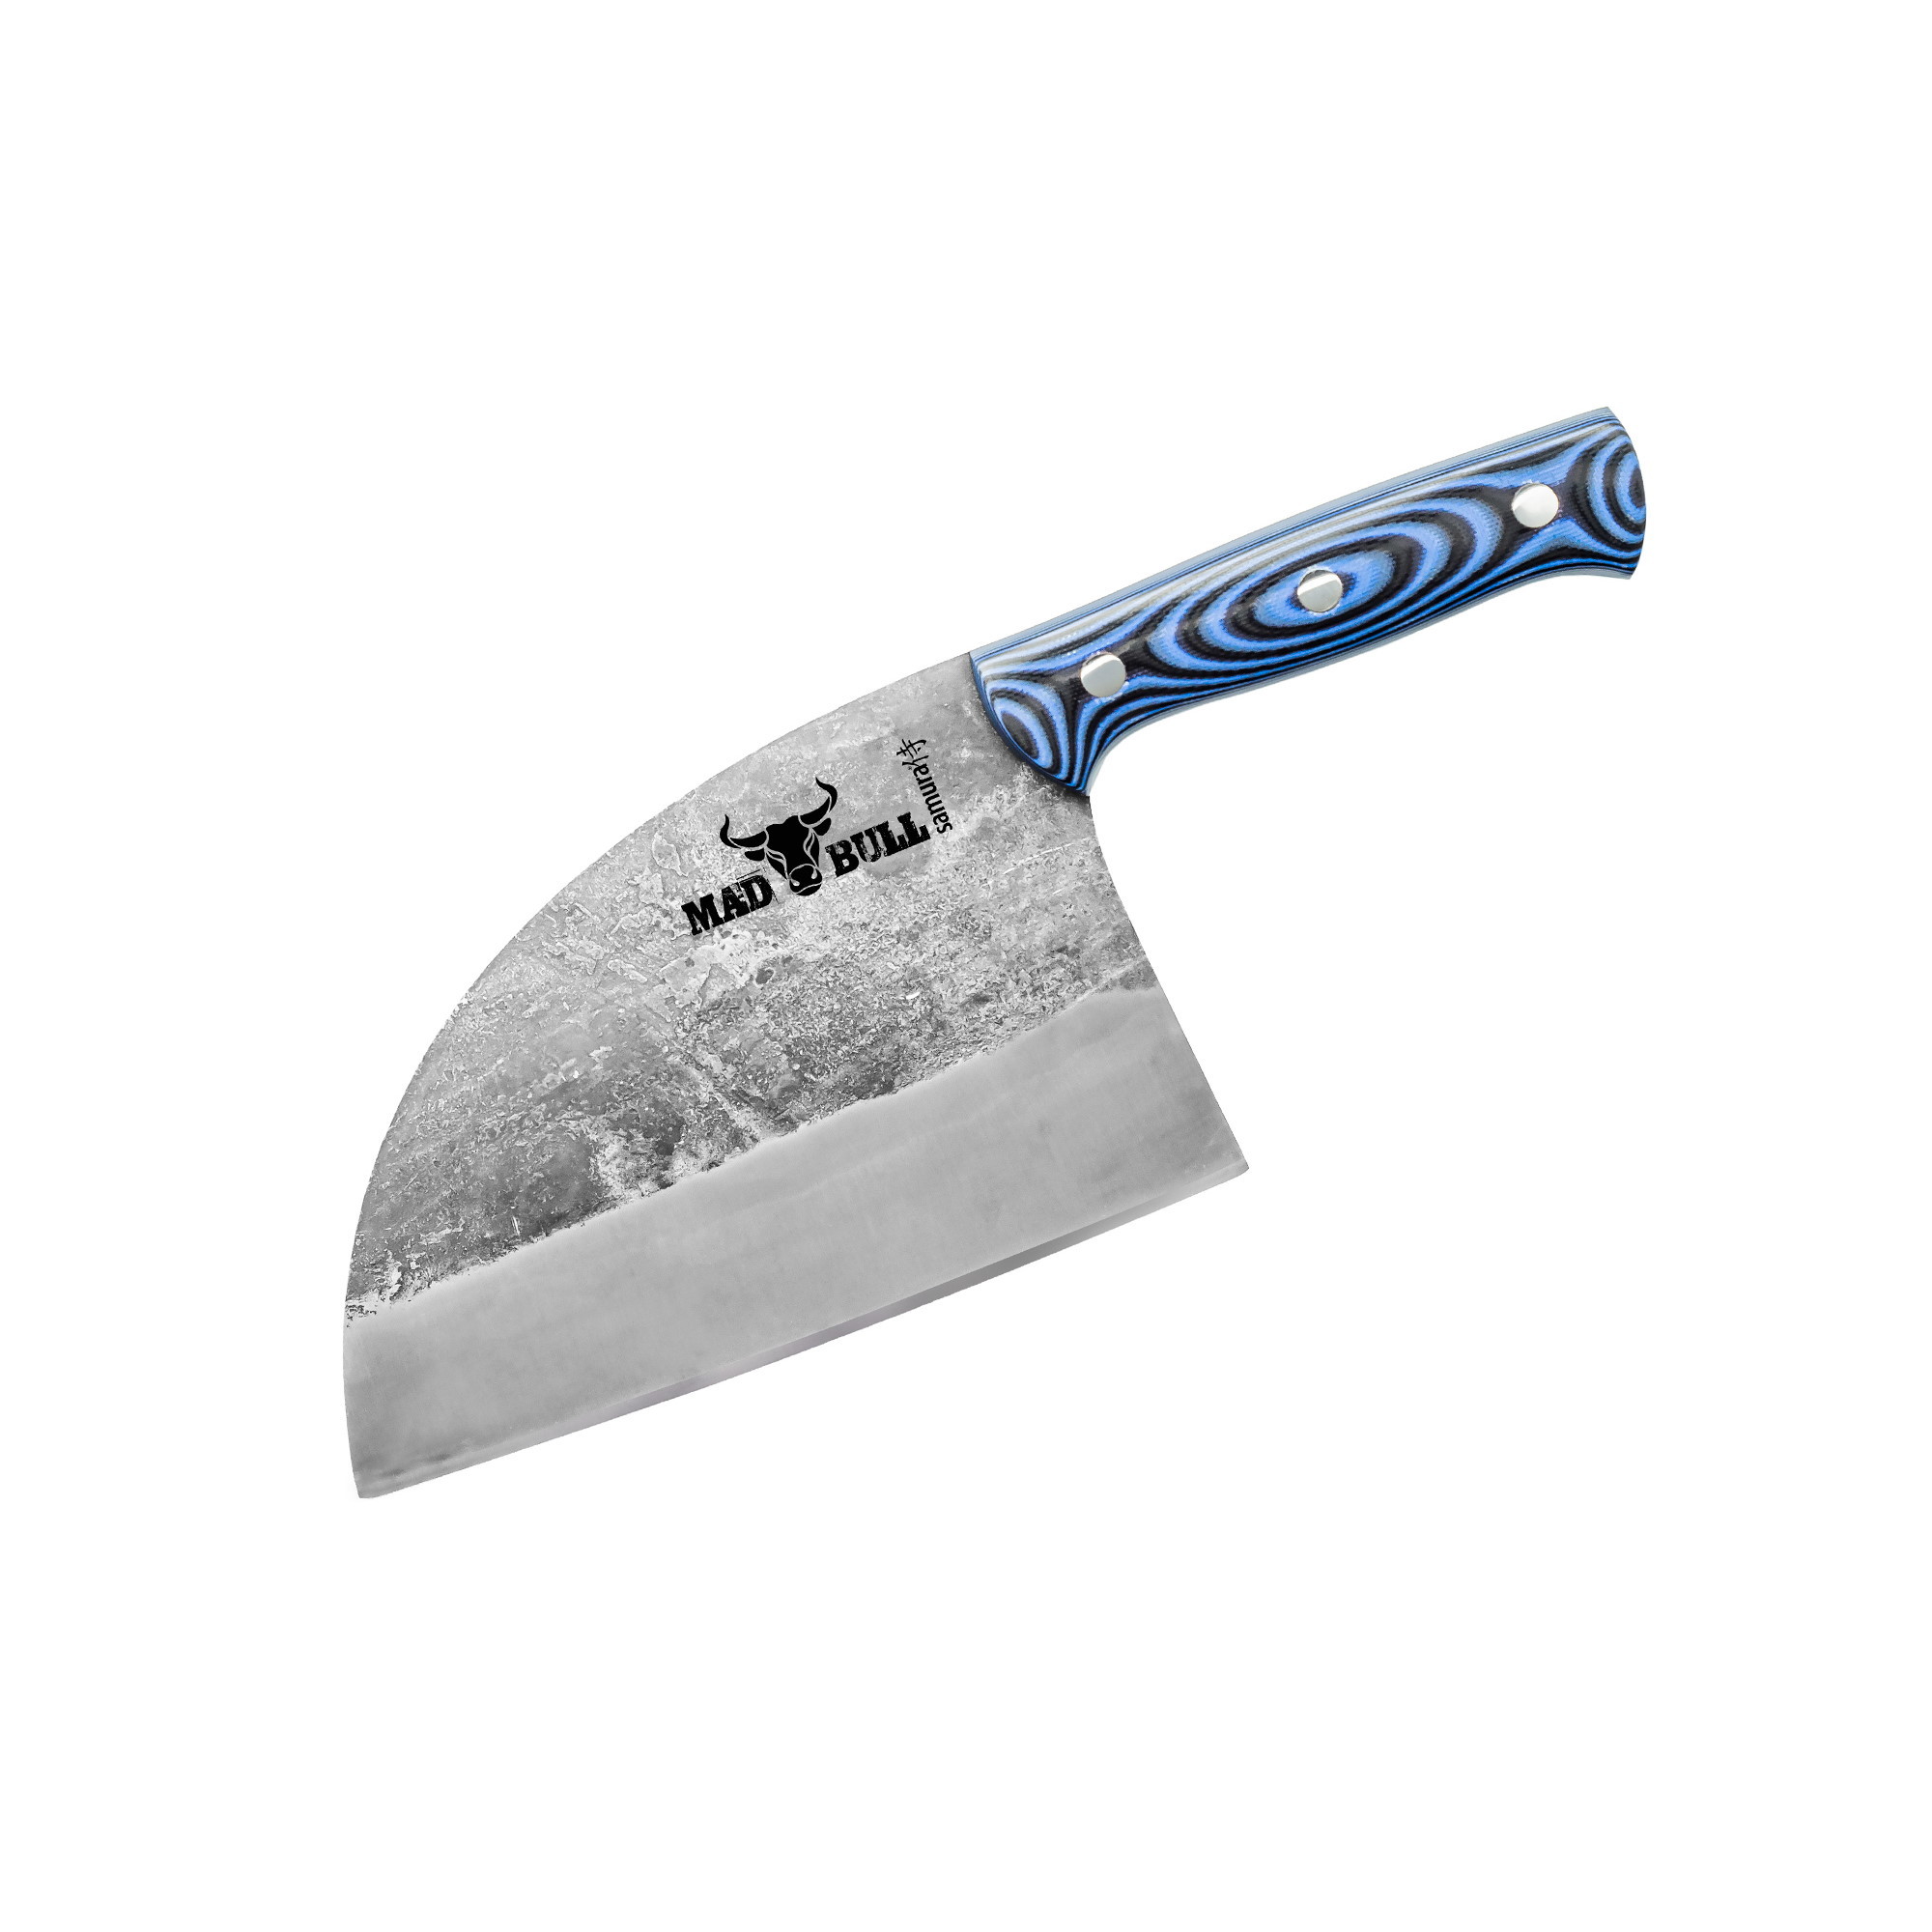 Сербский нож (топорик) Samura MAD BULL, сталь AUS-8, рукоять G10